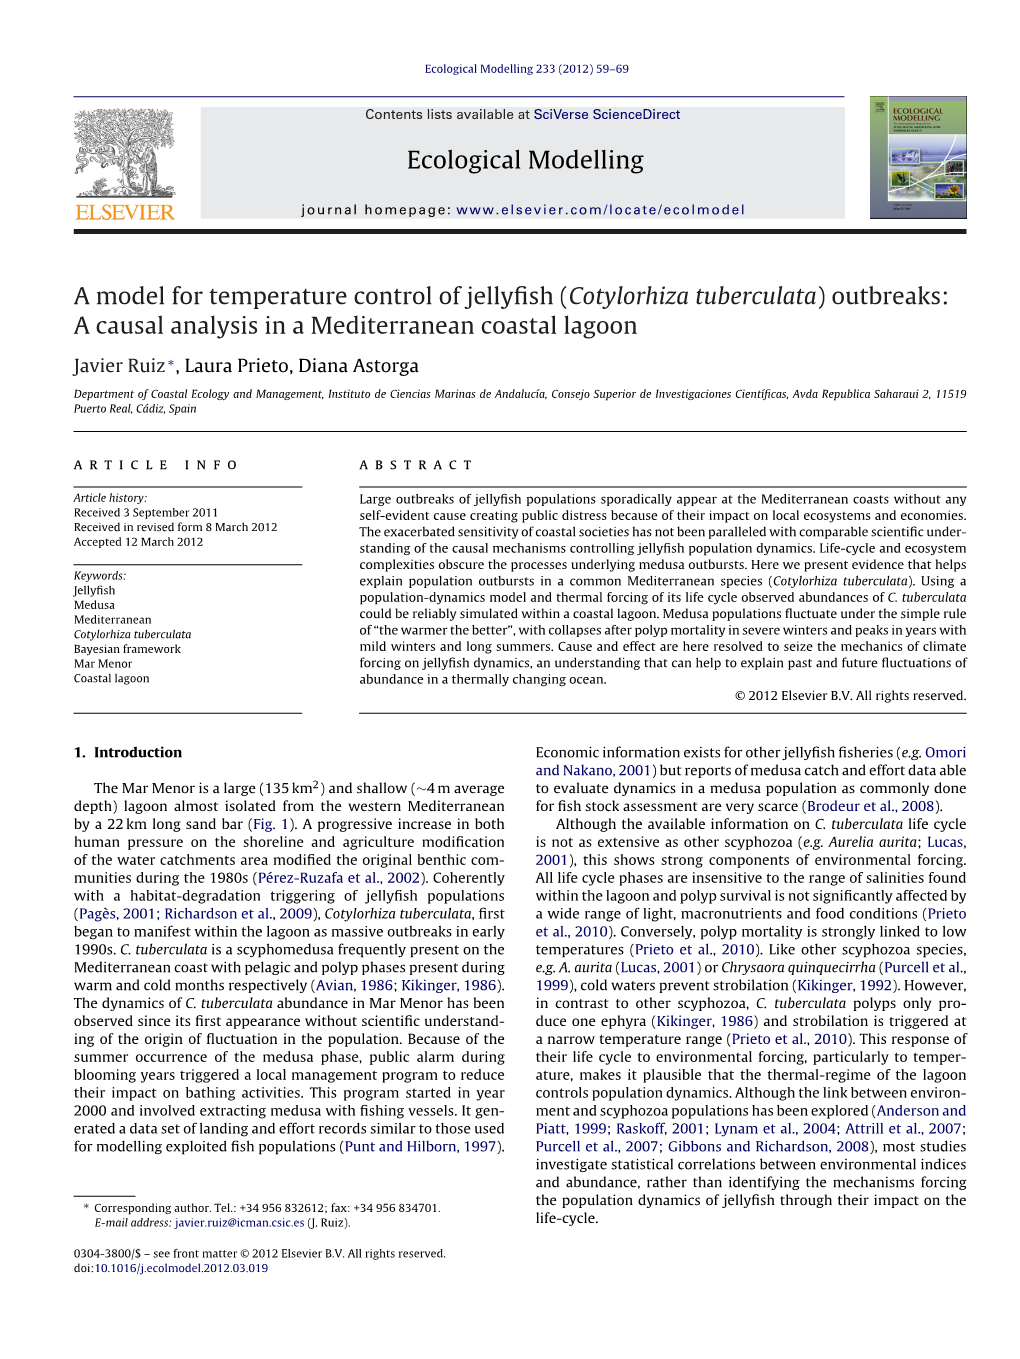 A Model for Temperature Control of Jellyfish (Cotylorhiza Tuberculata